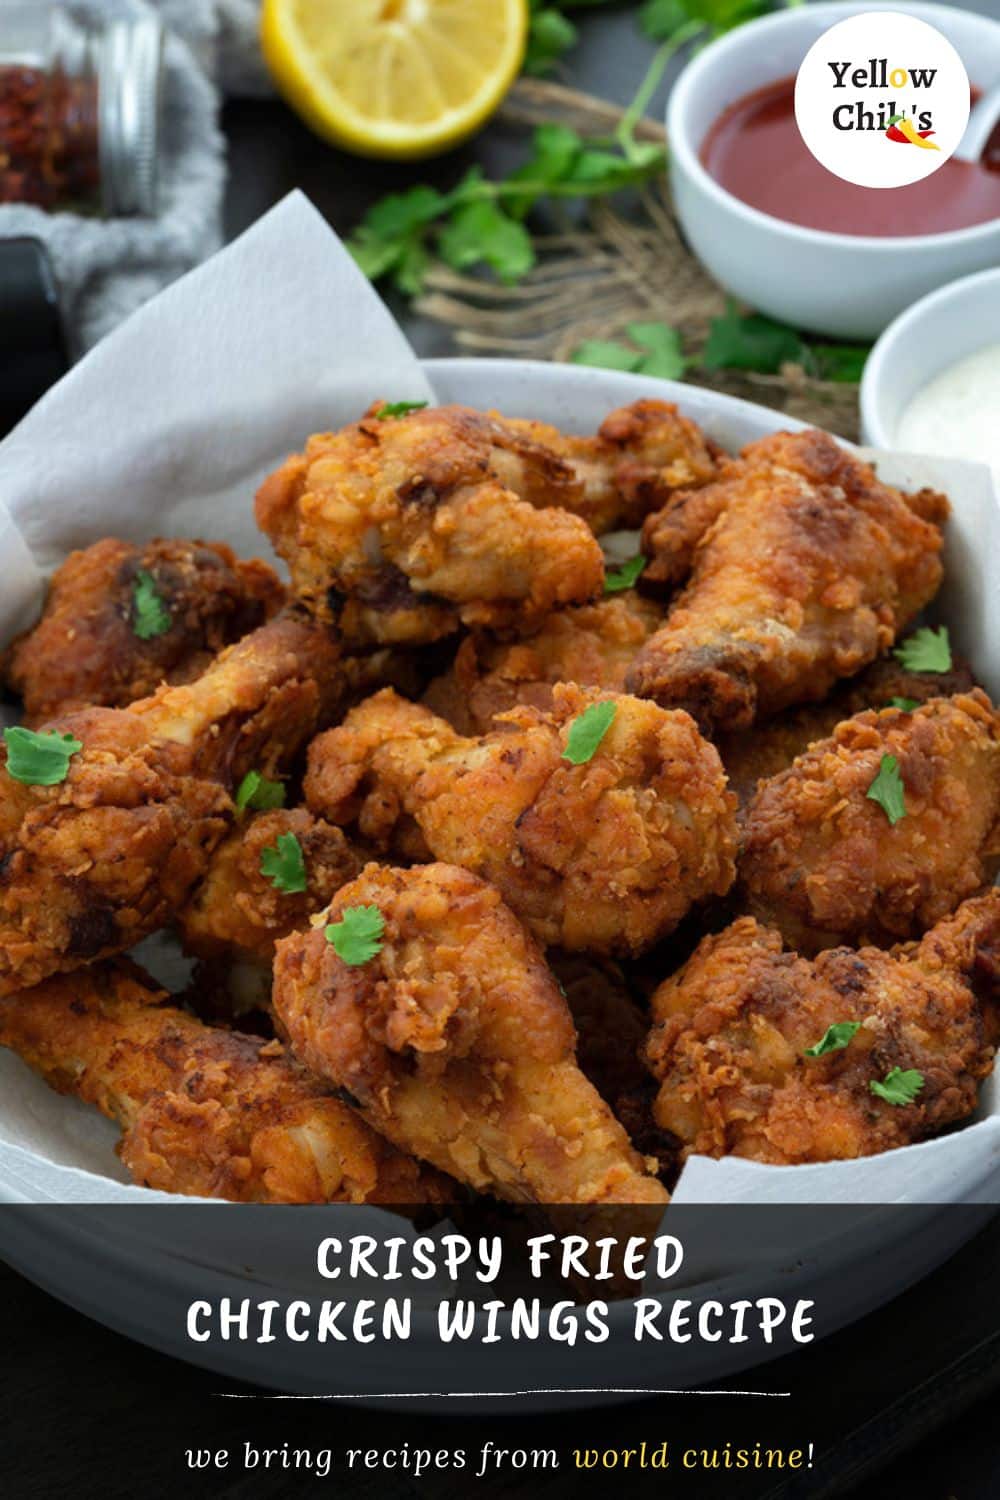 Deep Fried Chicken Wings Recipe - Yellow Chili's